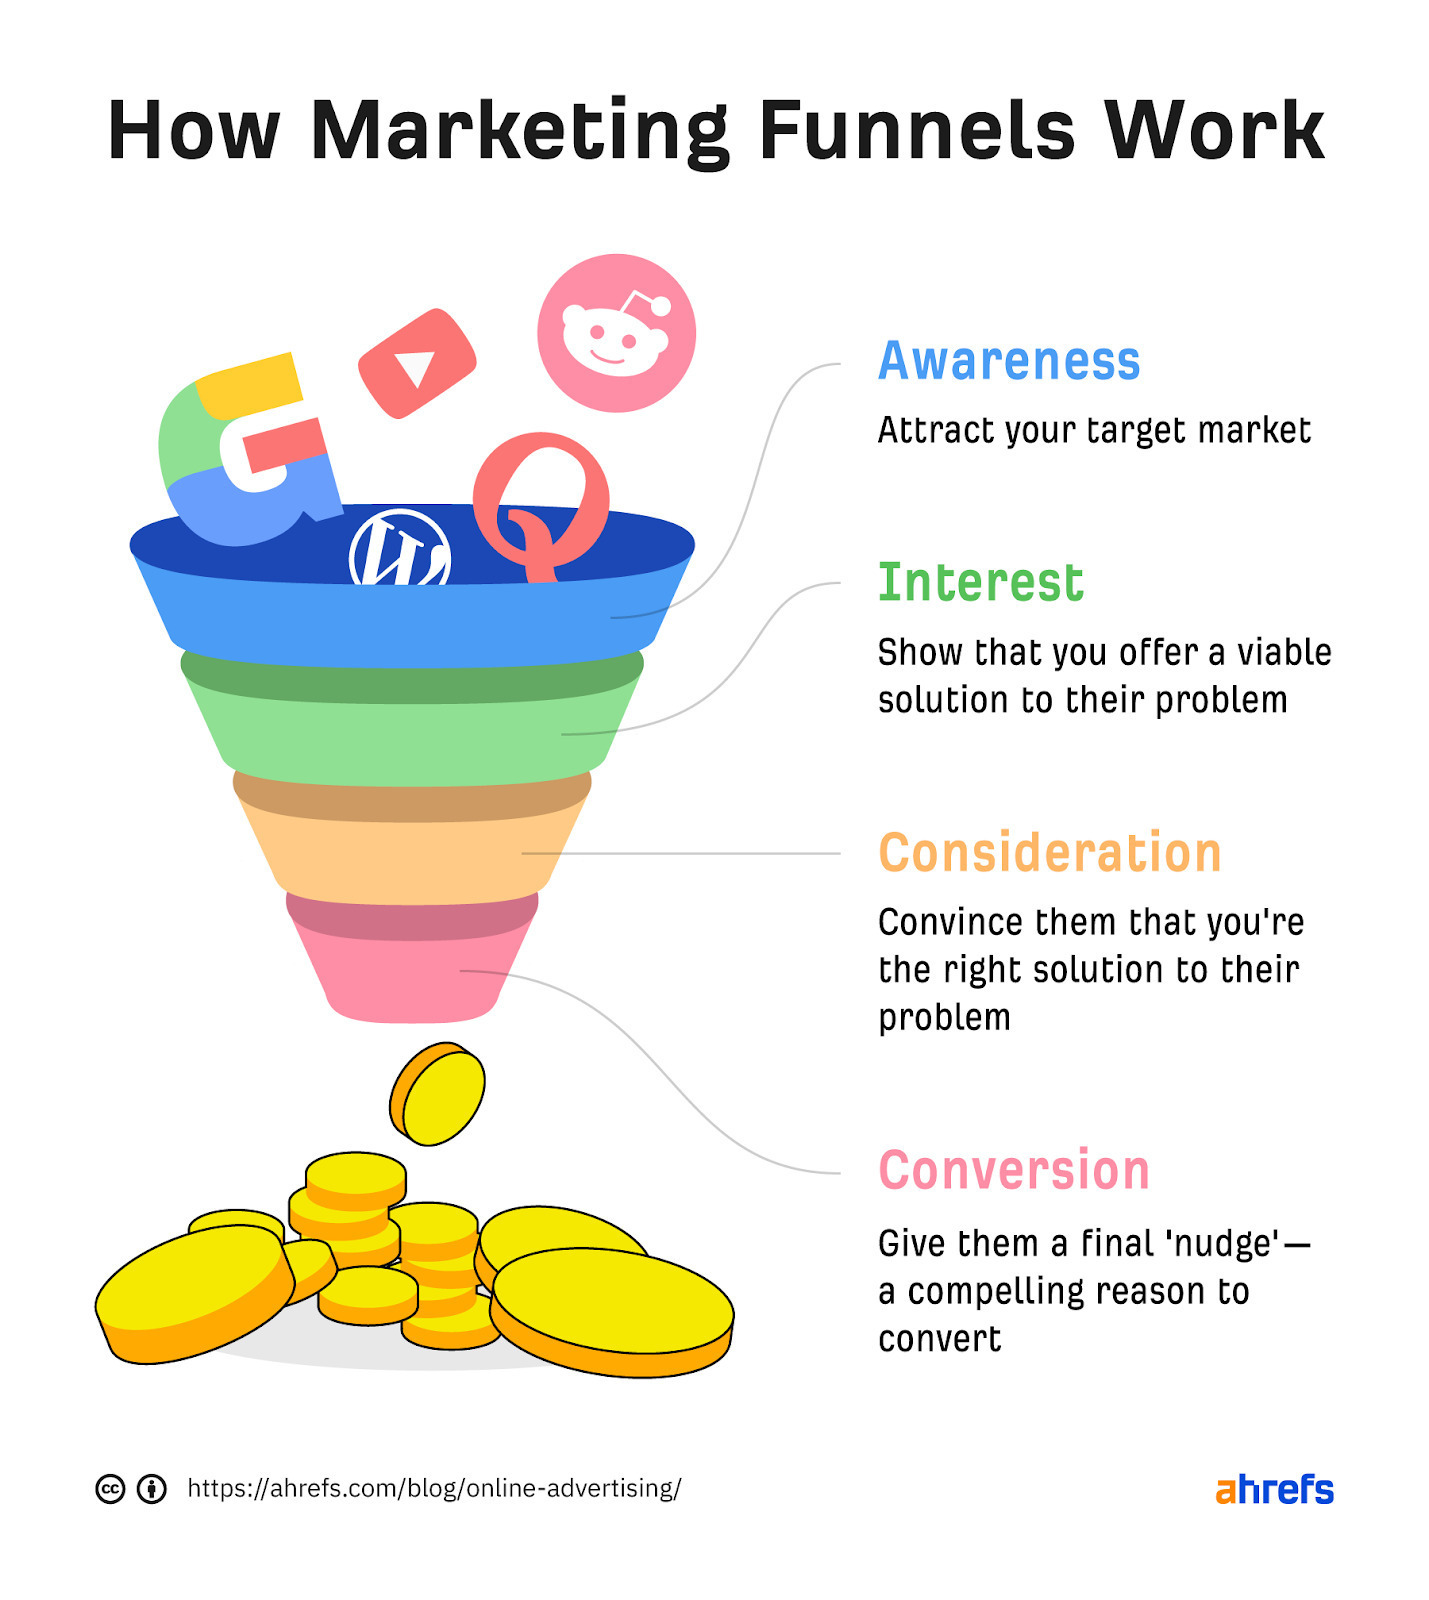 How marketing funnels work
